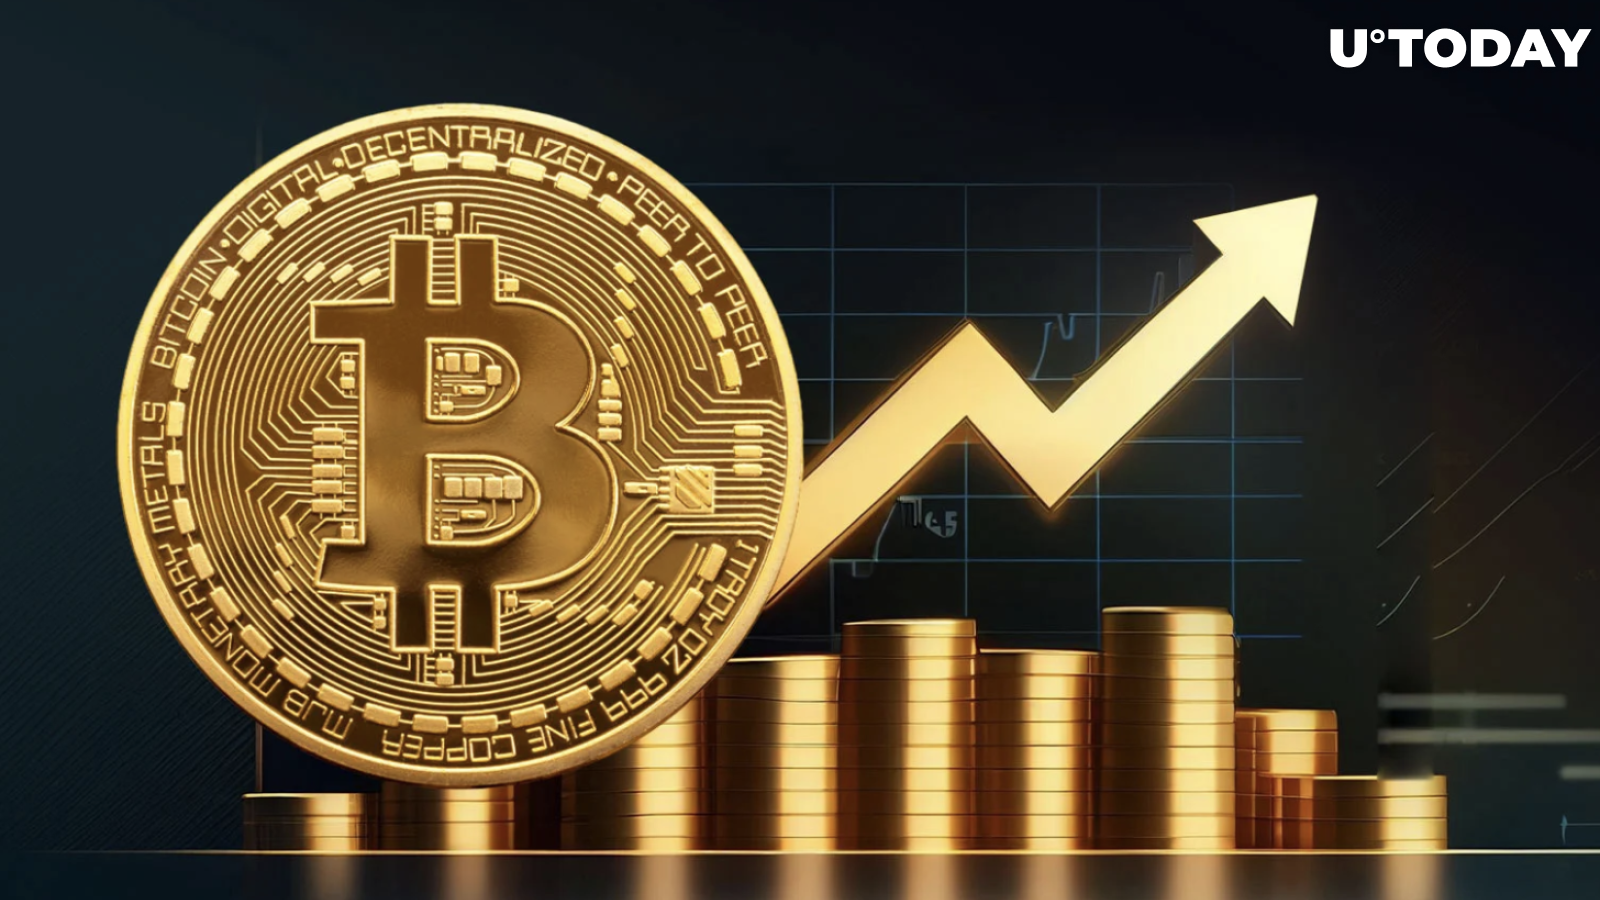 Unstoppable Rally: Bitcoin (BTC) Price Finally Surpasses $40,000